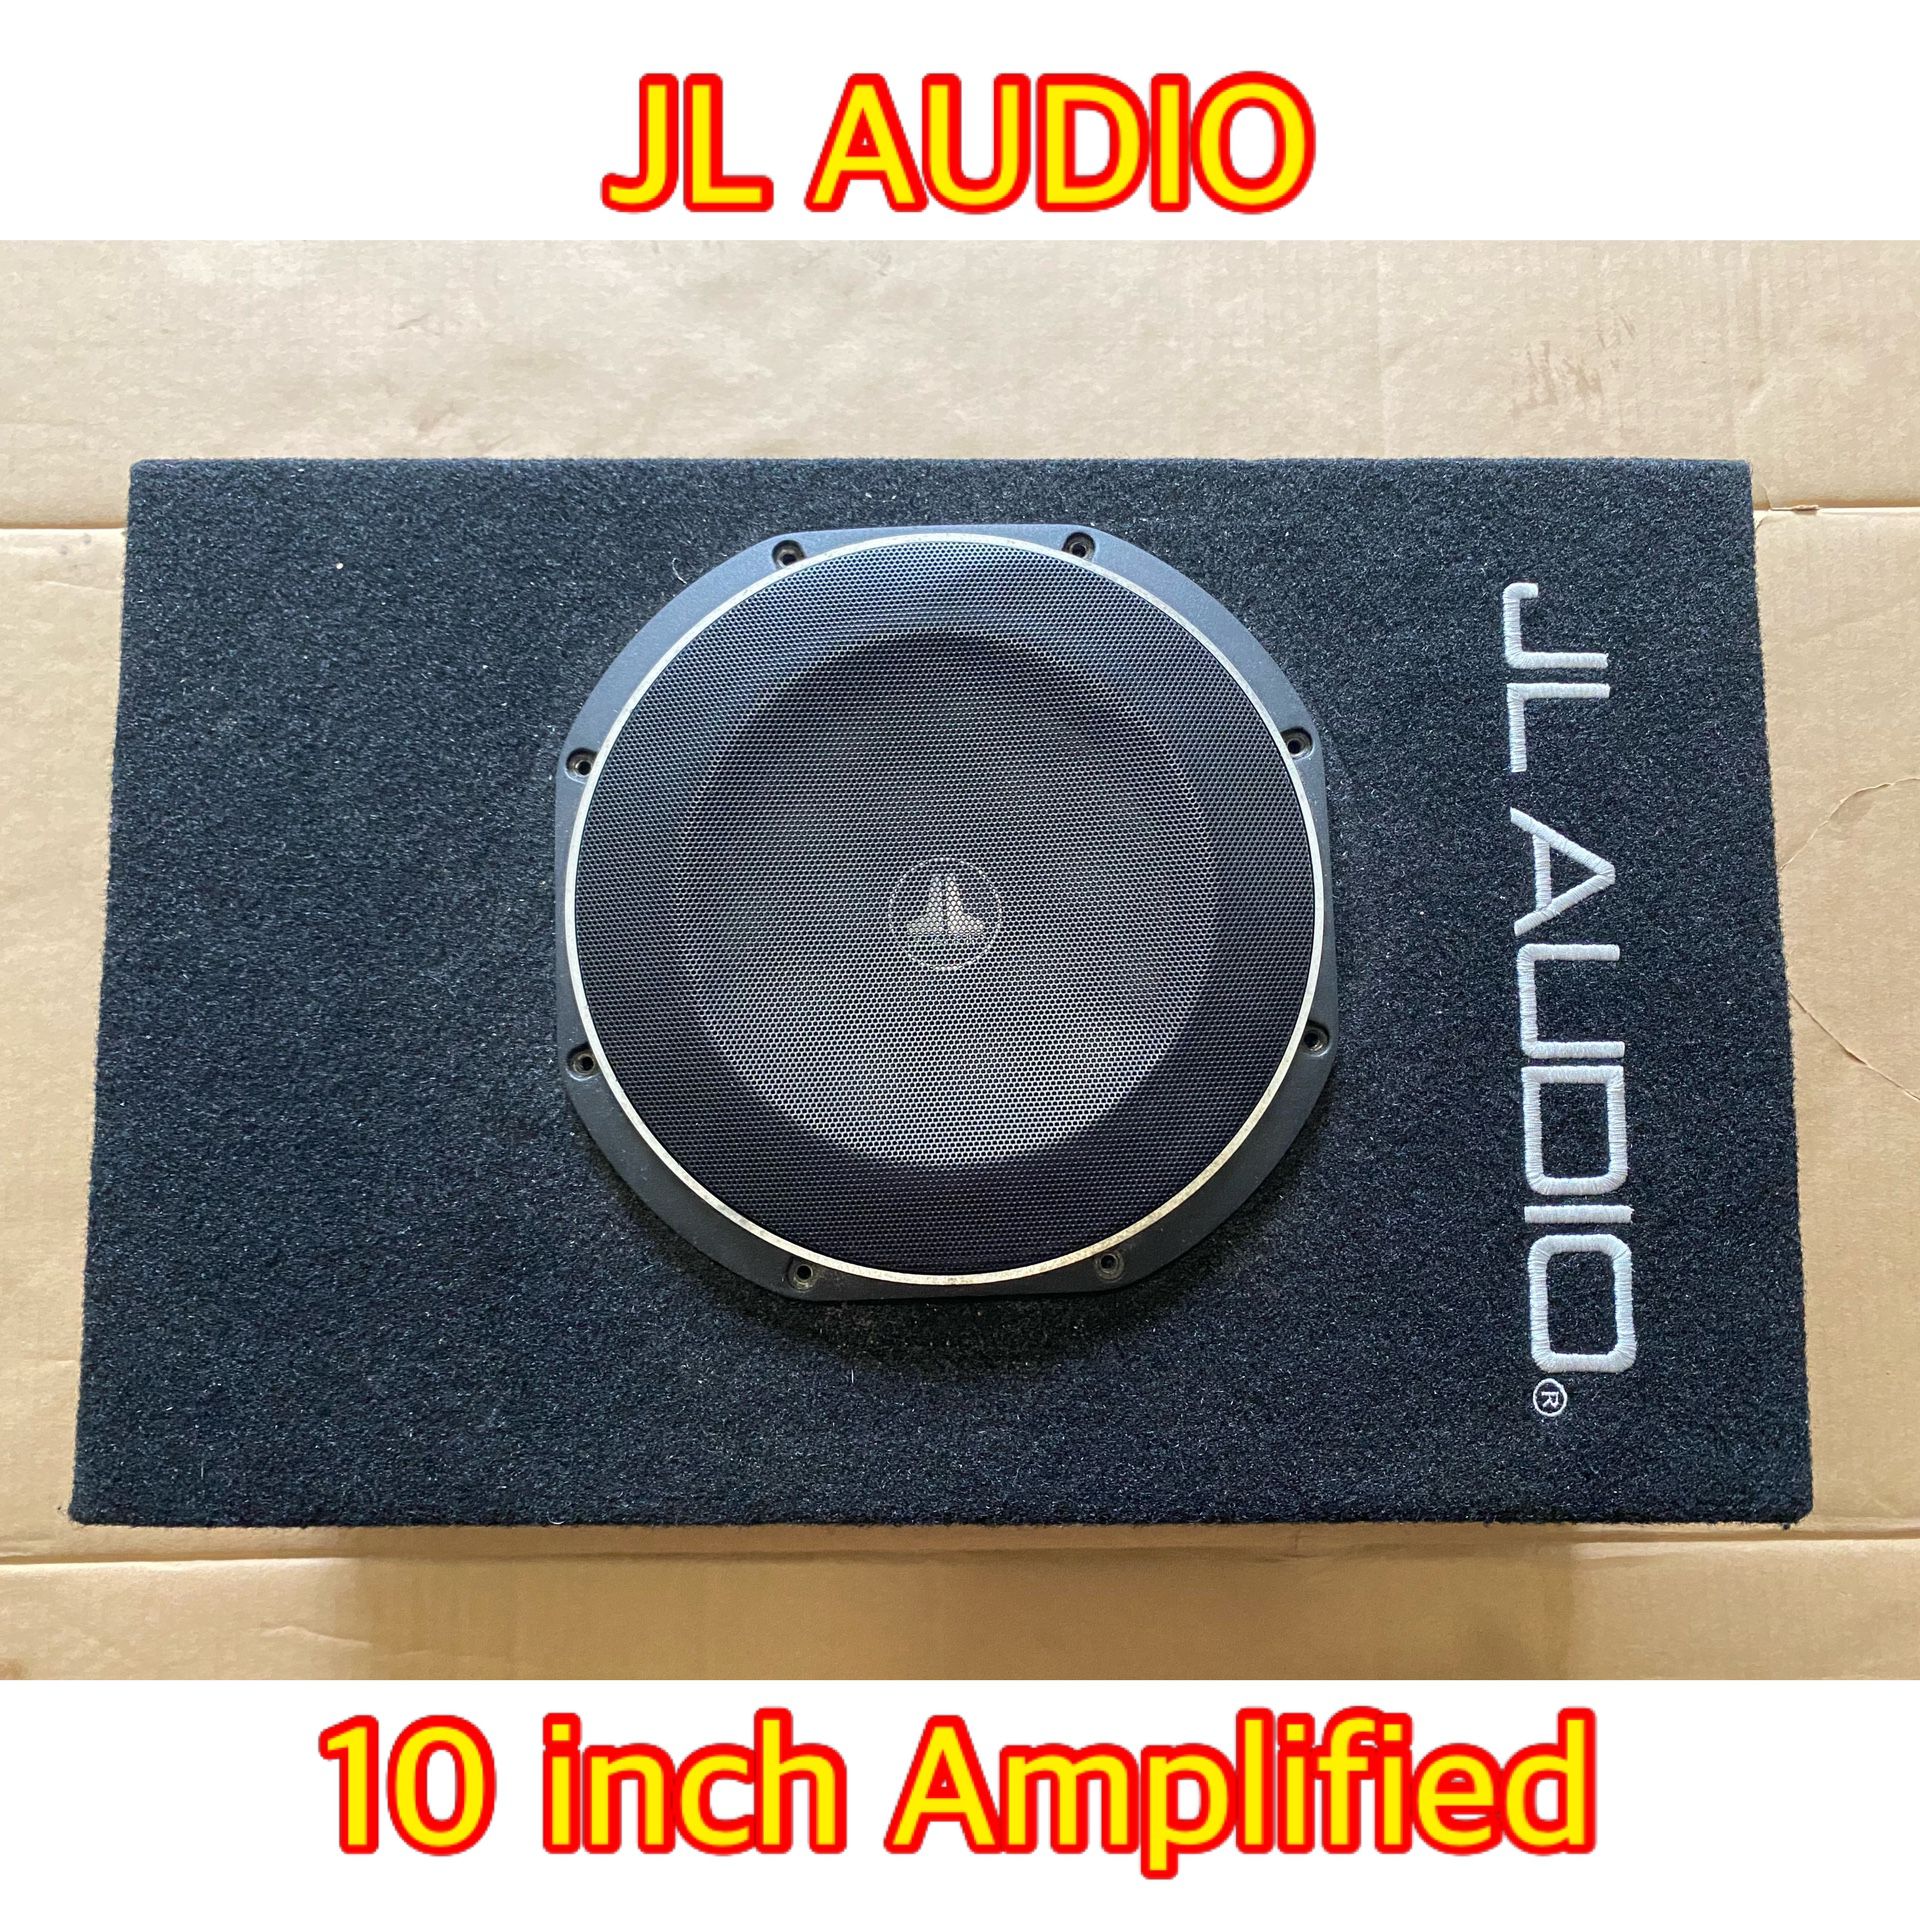 JL AUDIO 10” Amplified 